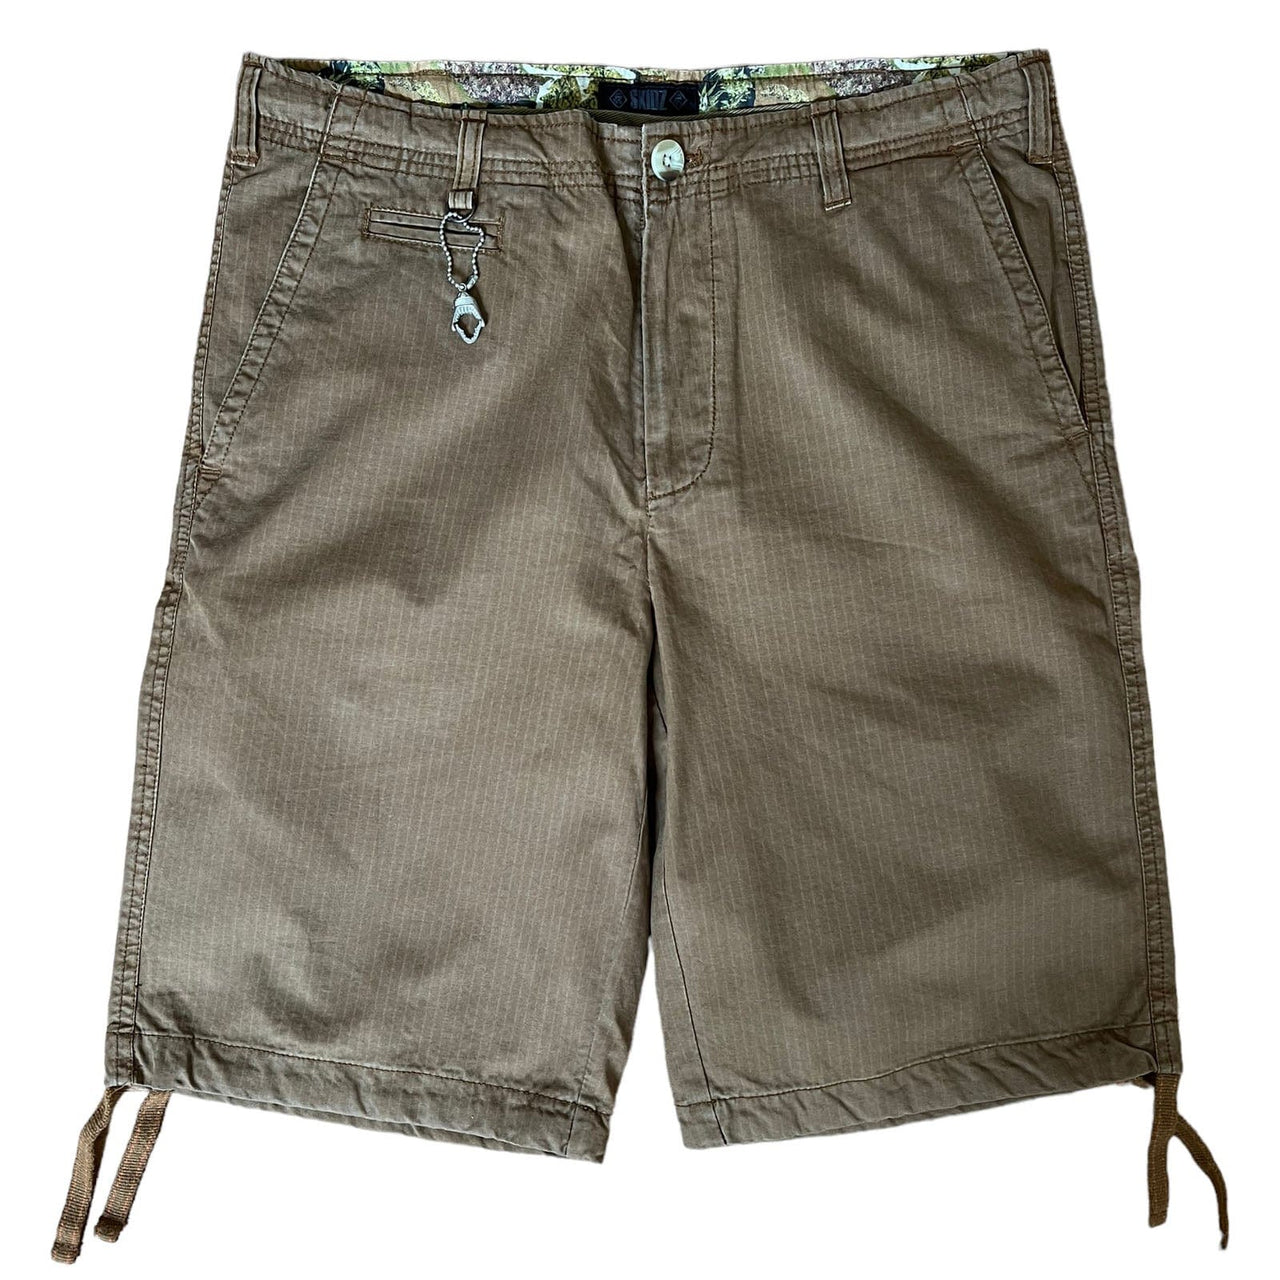 SKIDZ Shorts Canvas Shorts - Brown